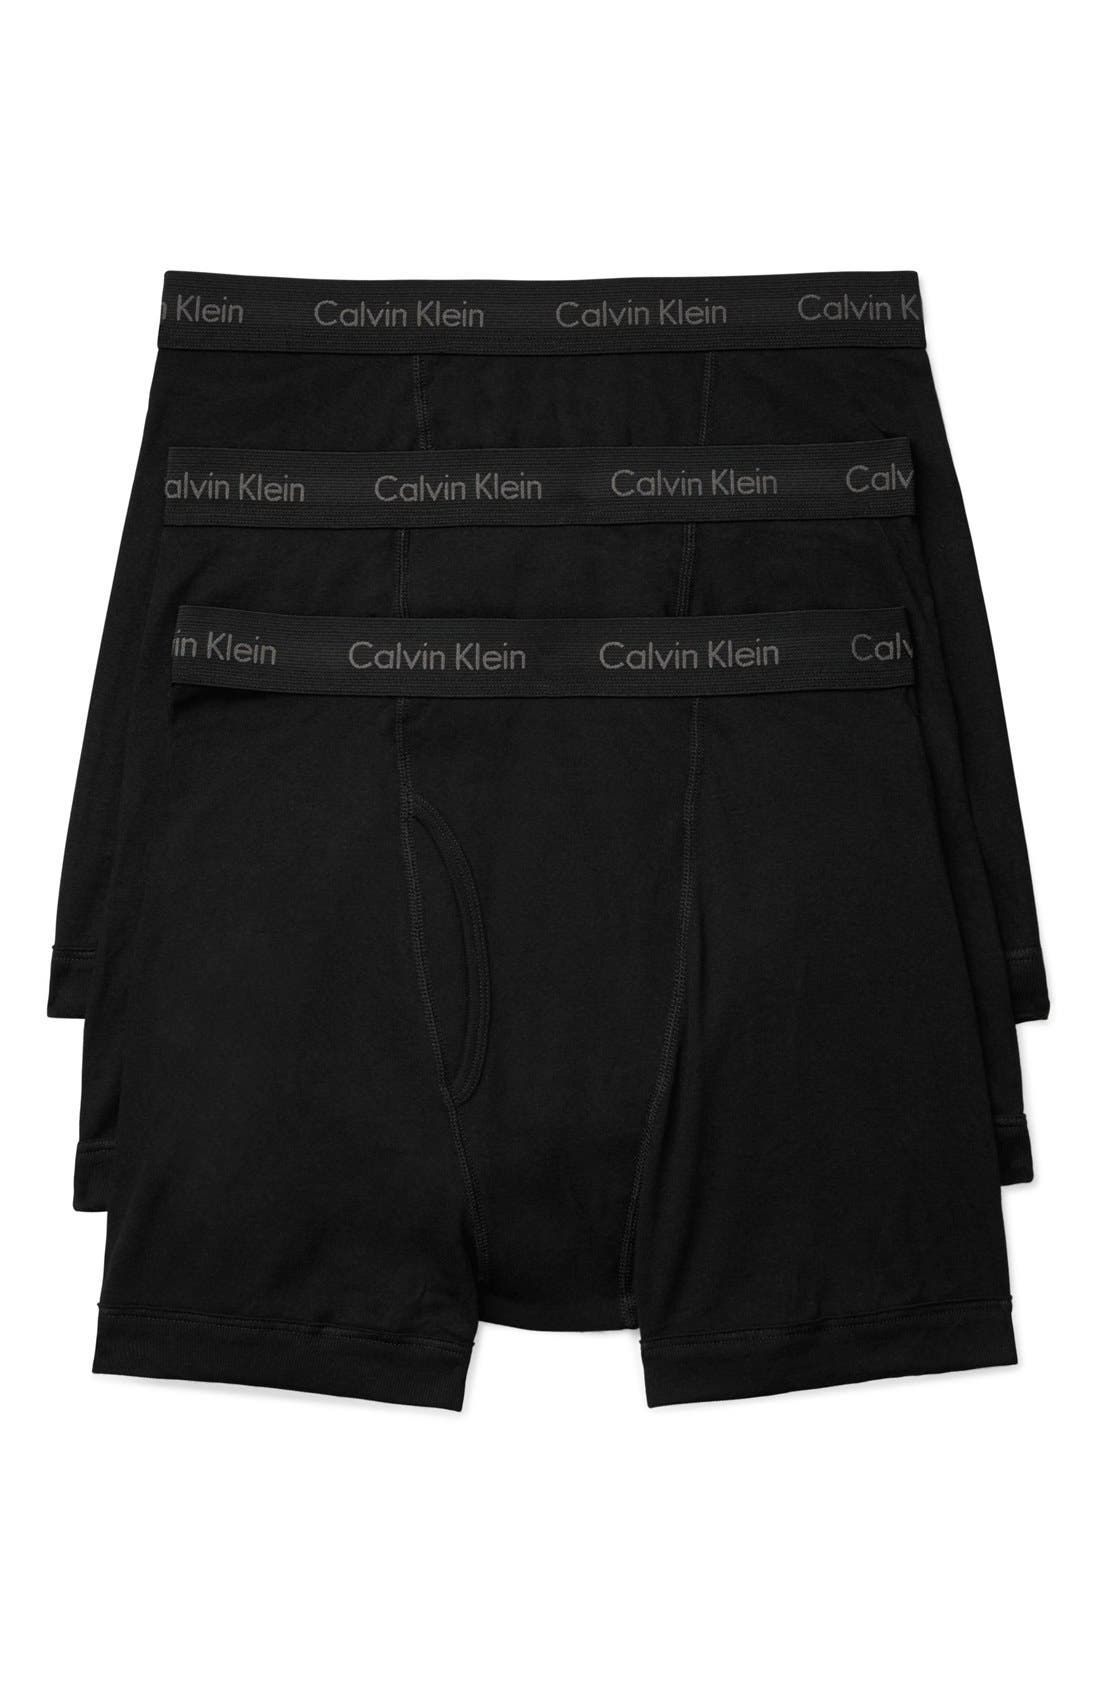 UPC 608279055389 product image for Men's Calvin Klein 3-Pack Boxer Briefs, Size Large - Black | upcitemdb.com